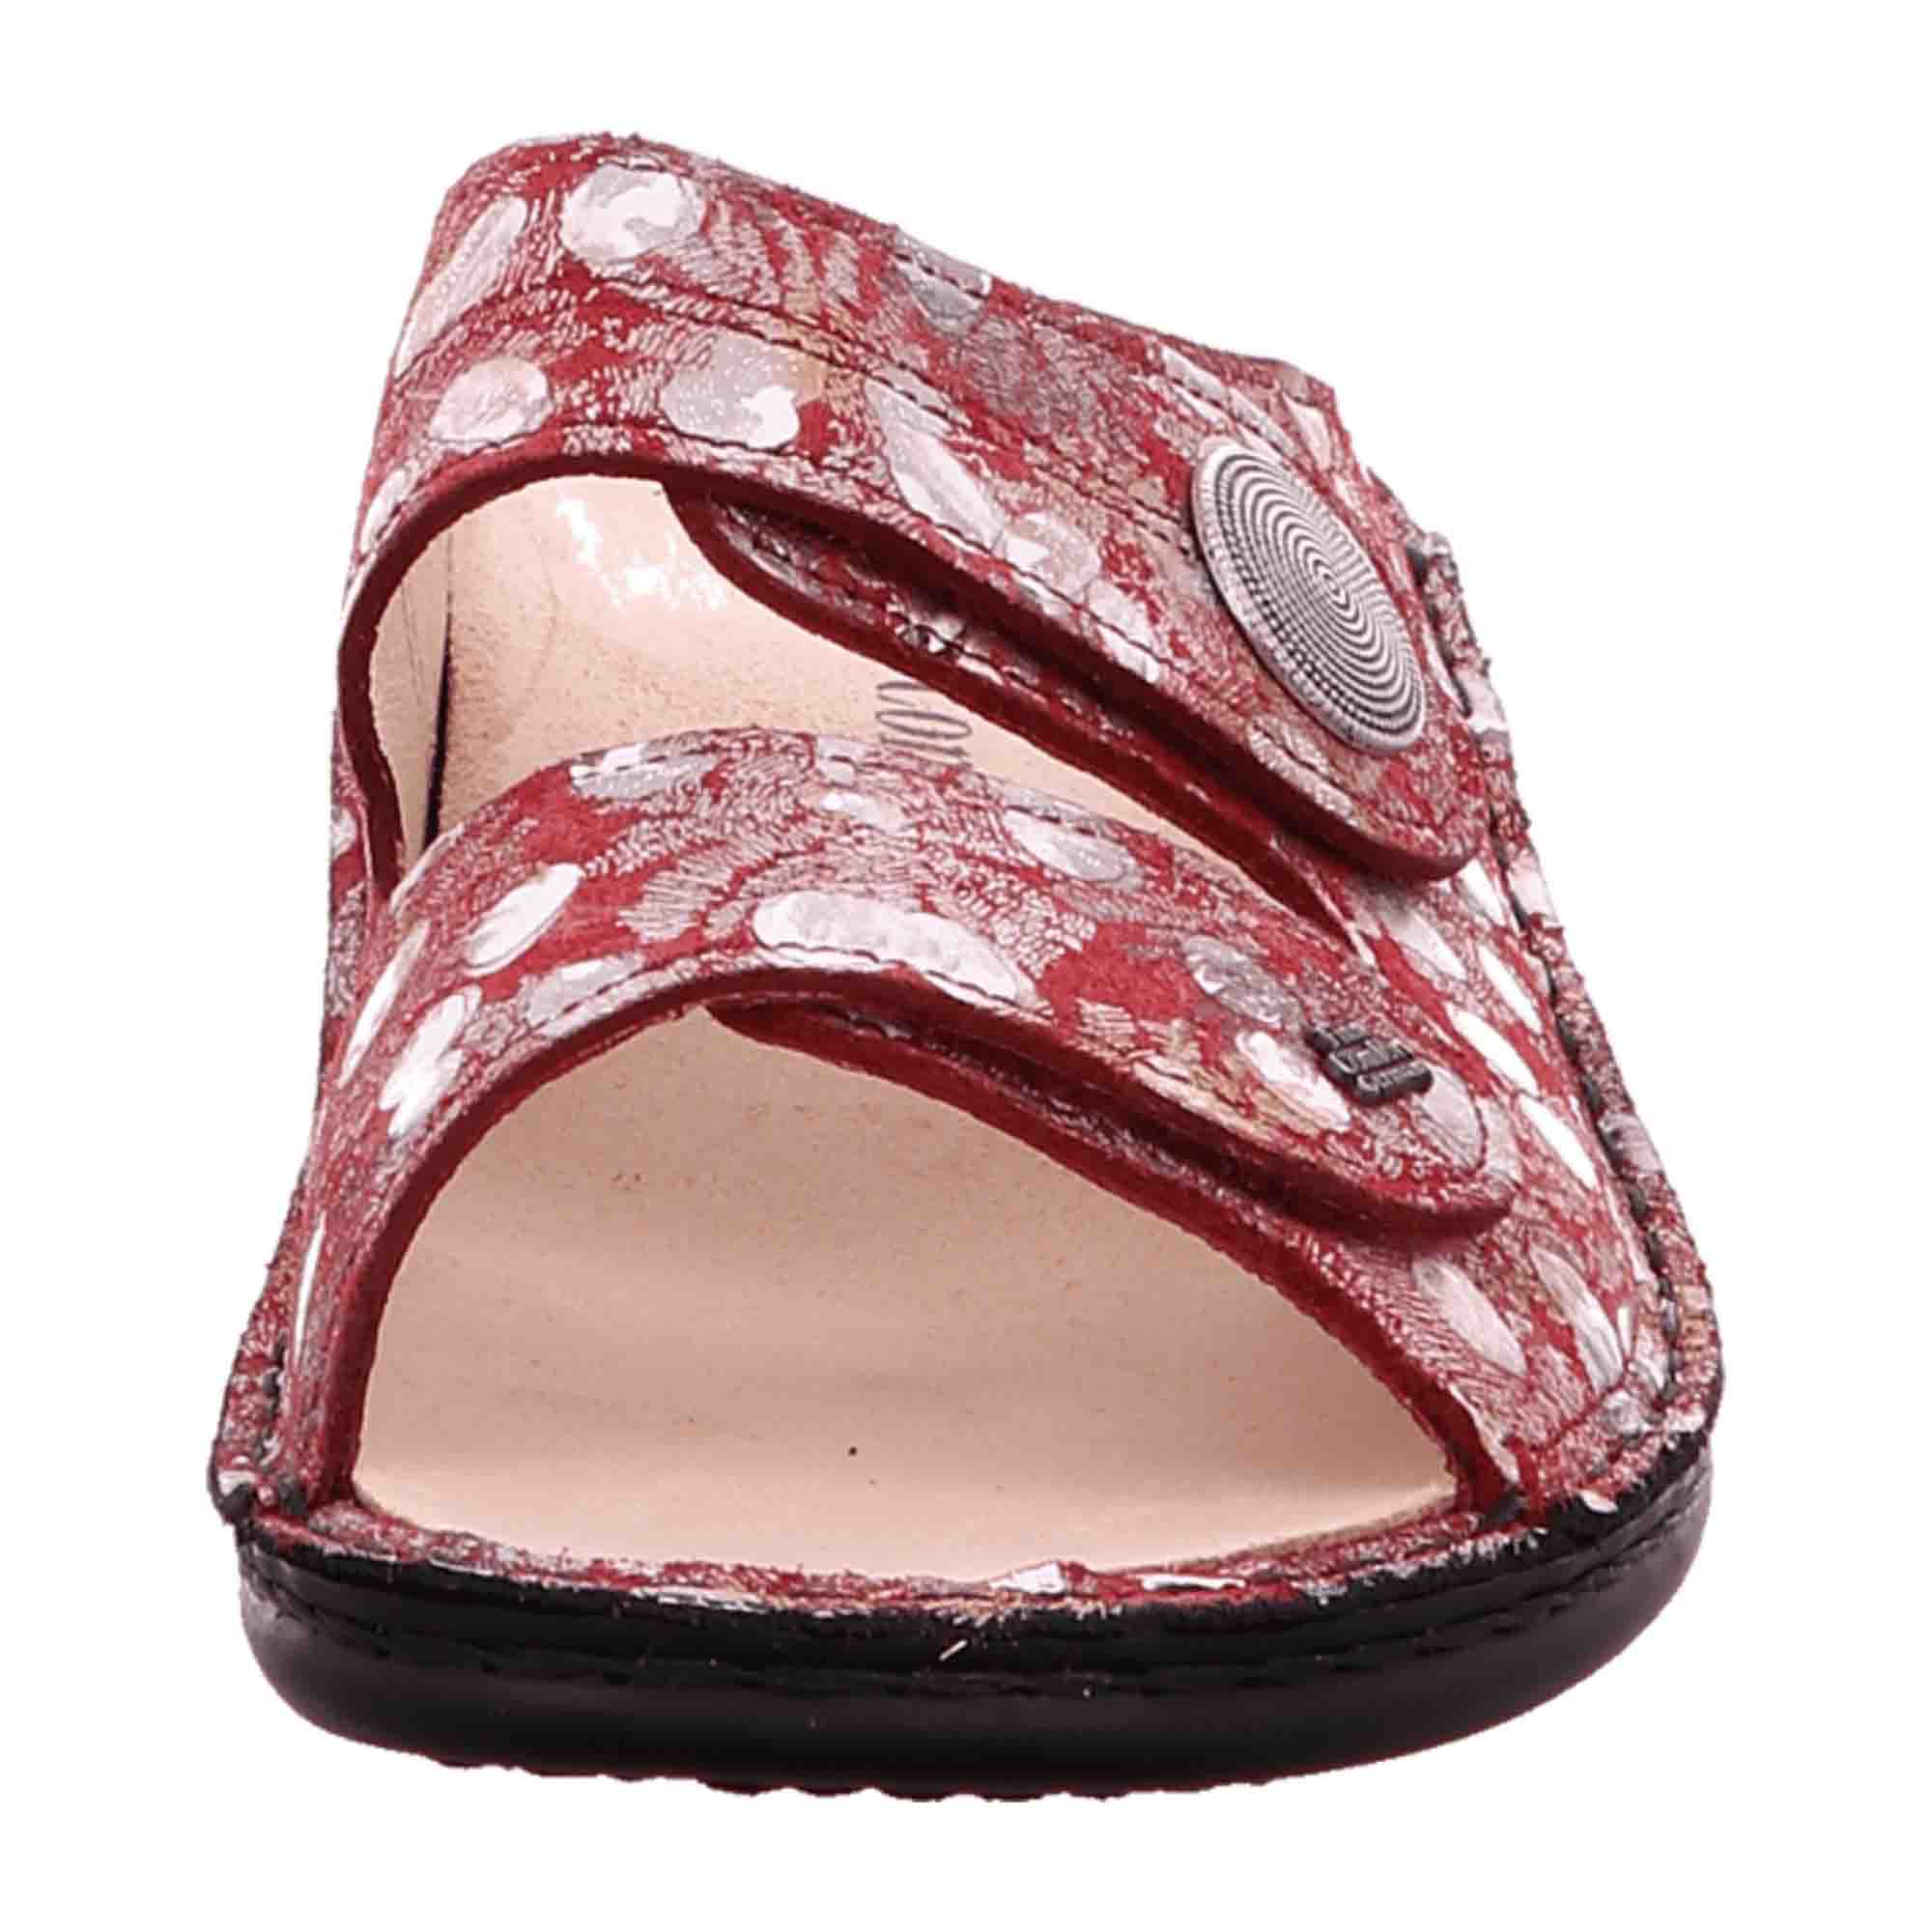 Finn Comfort Sansibar Women's Slide Sandals - Comfortable Leather Slides, Red